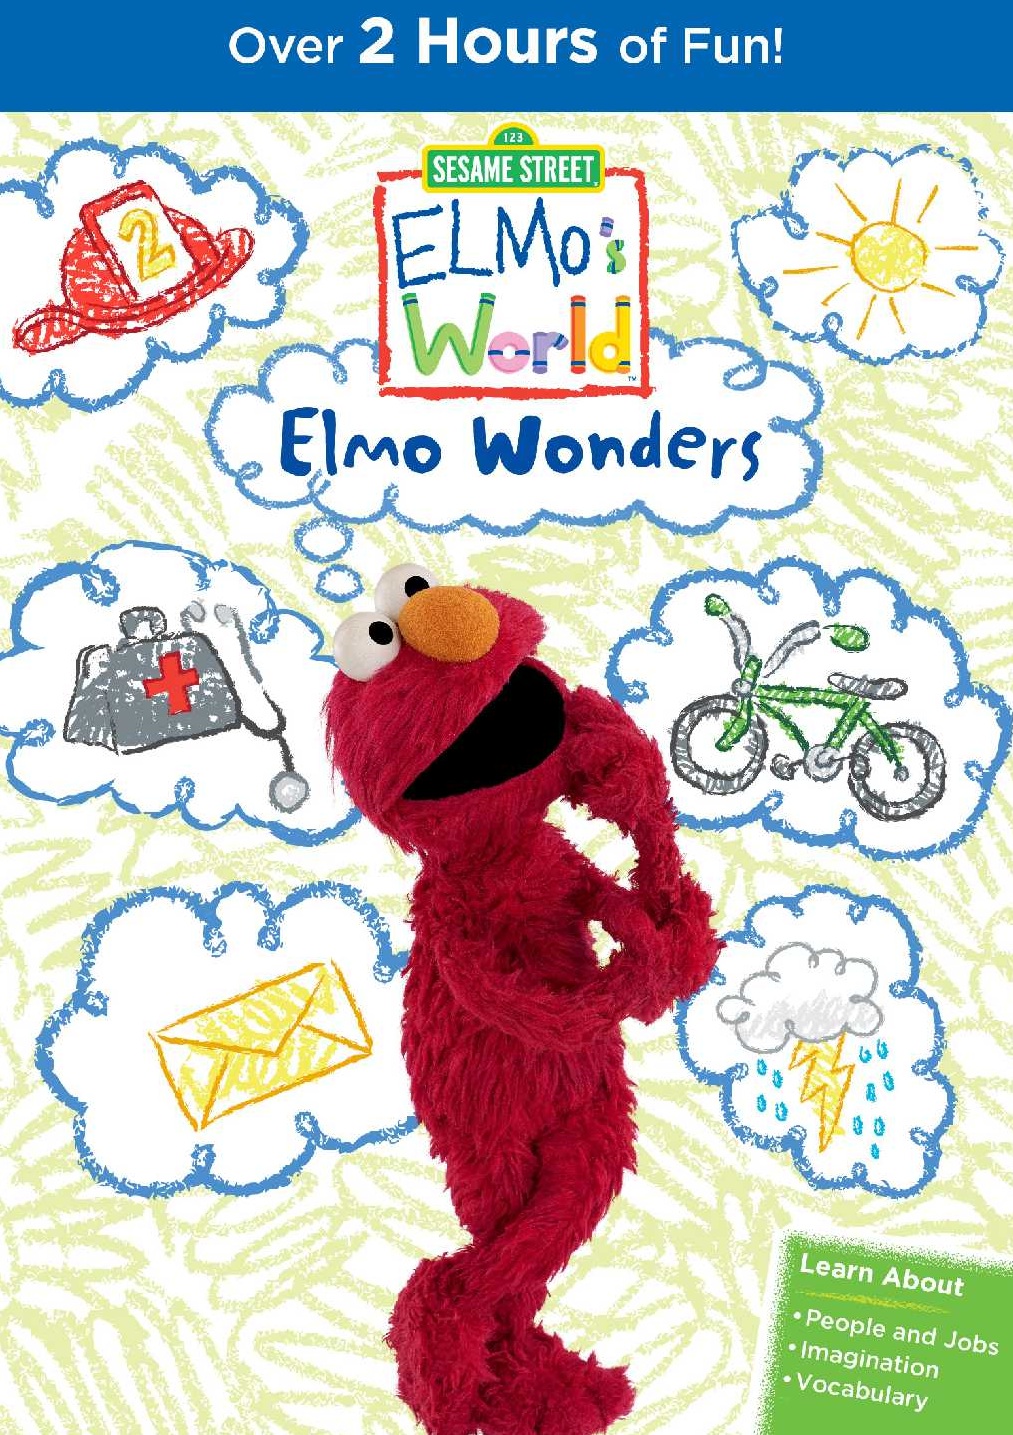 Elmo’s World: Elmo Wonders DVD Giveaway.